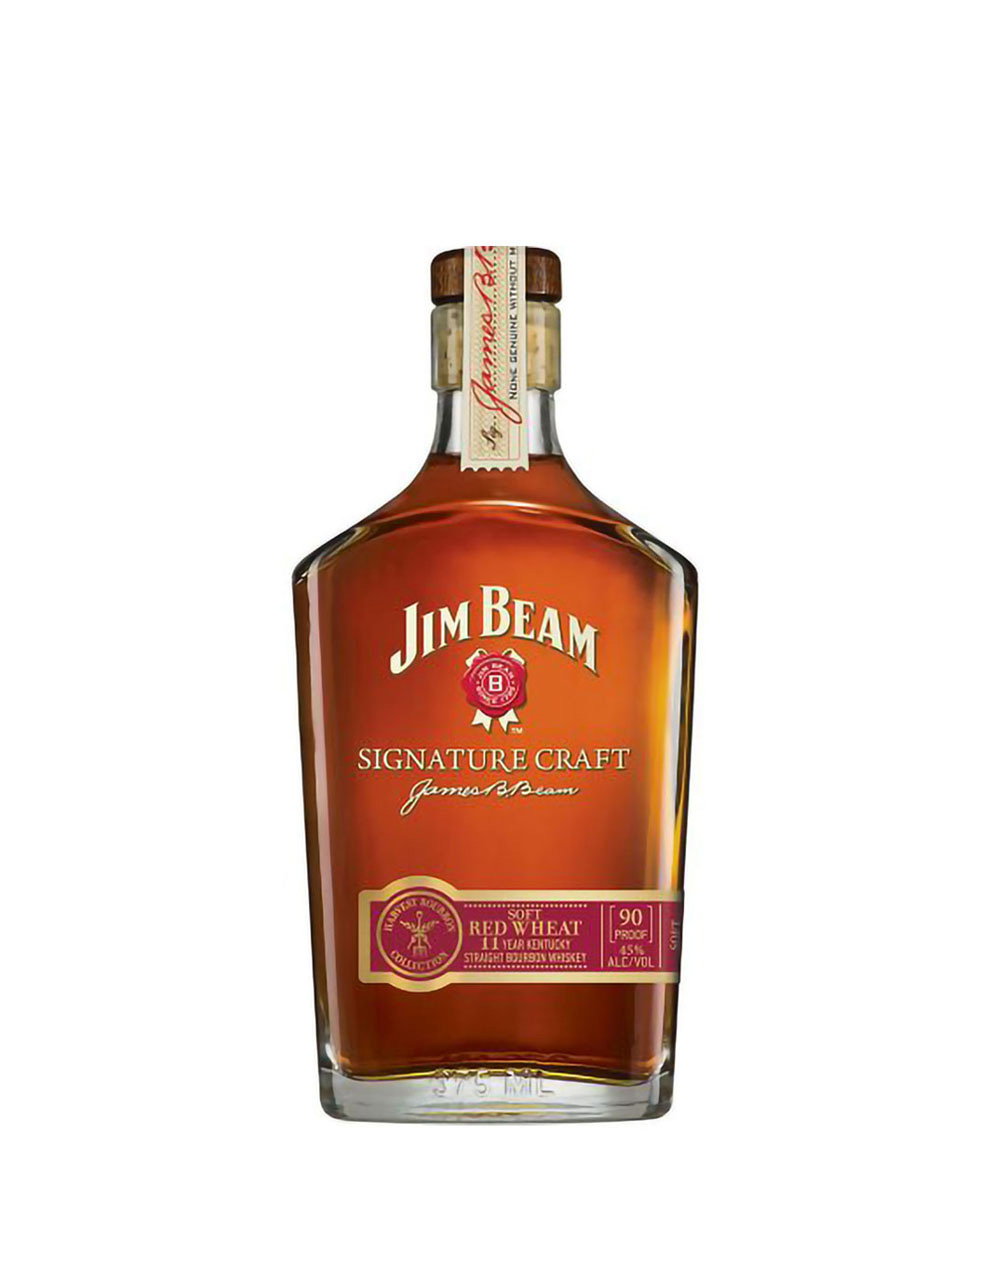 Jim Beam Signature Craft Soft Red Wheat 11 Year Old Bourbon